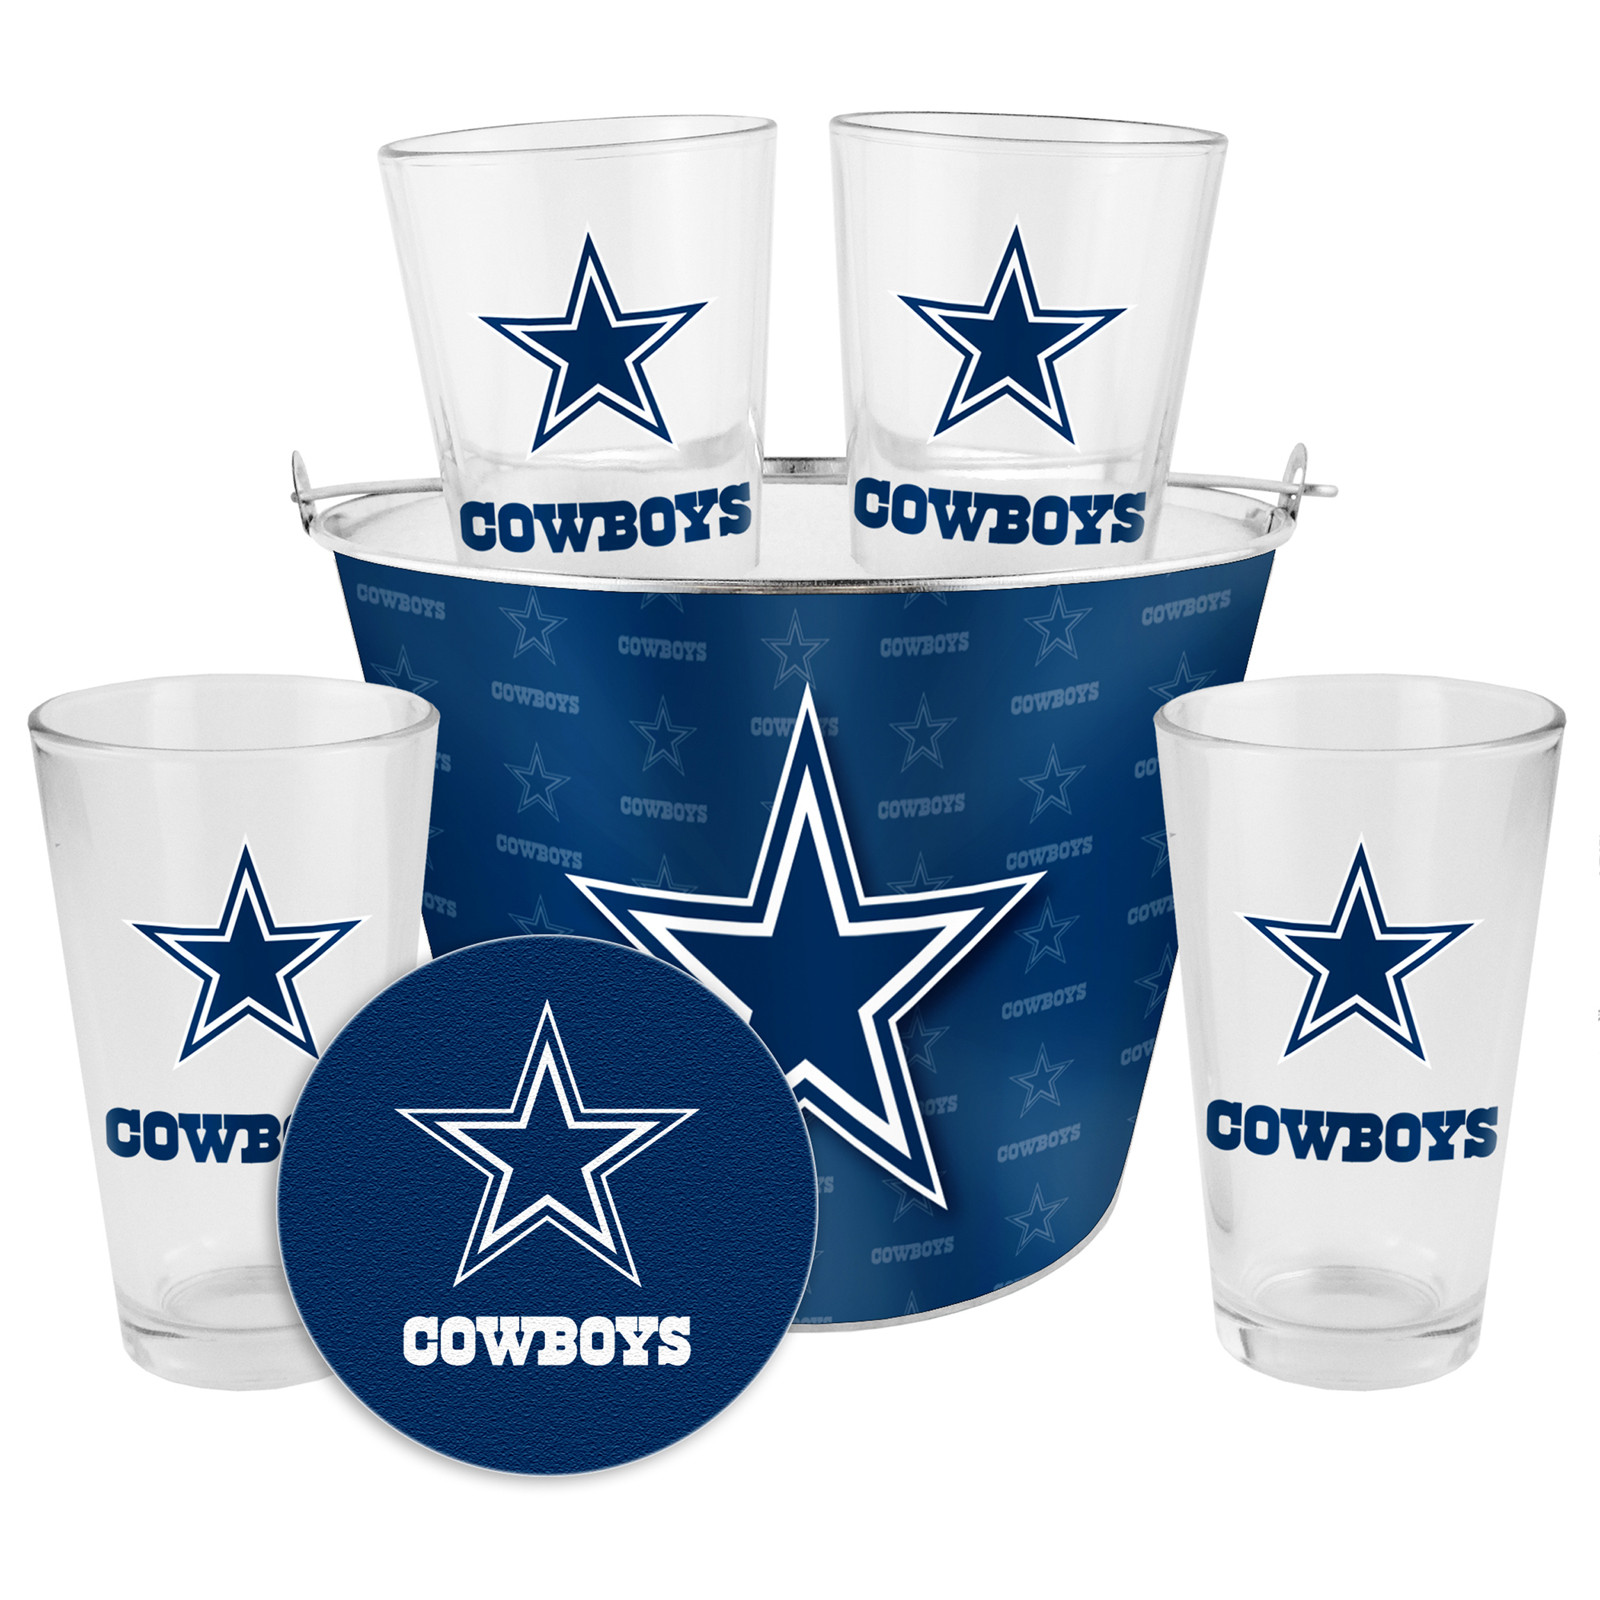 Dallas Cowboys Christmas Gift Ideas
 Boelter Brands Dallas Cowboys Gift Bucket Set